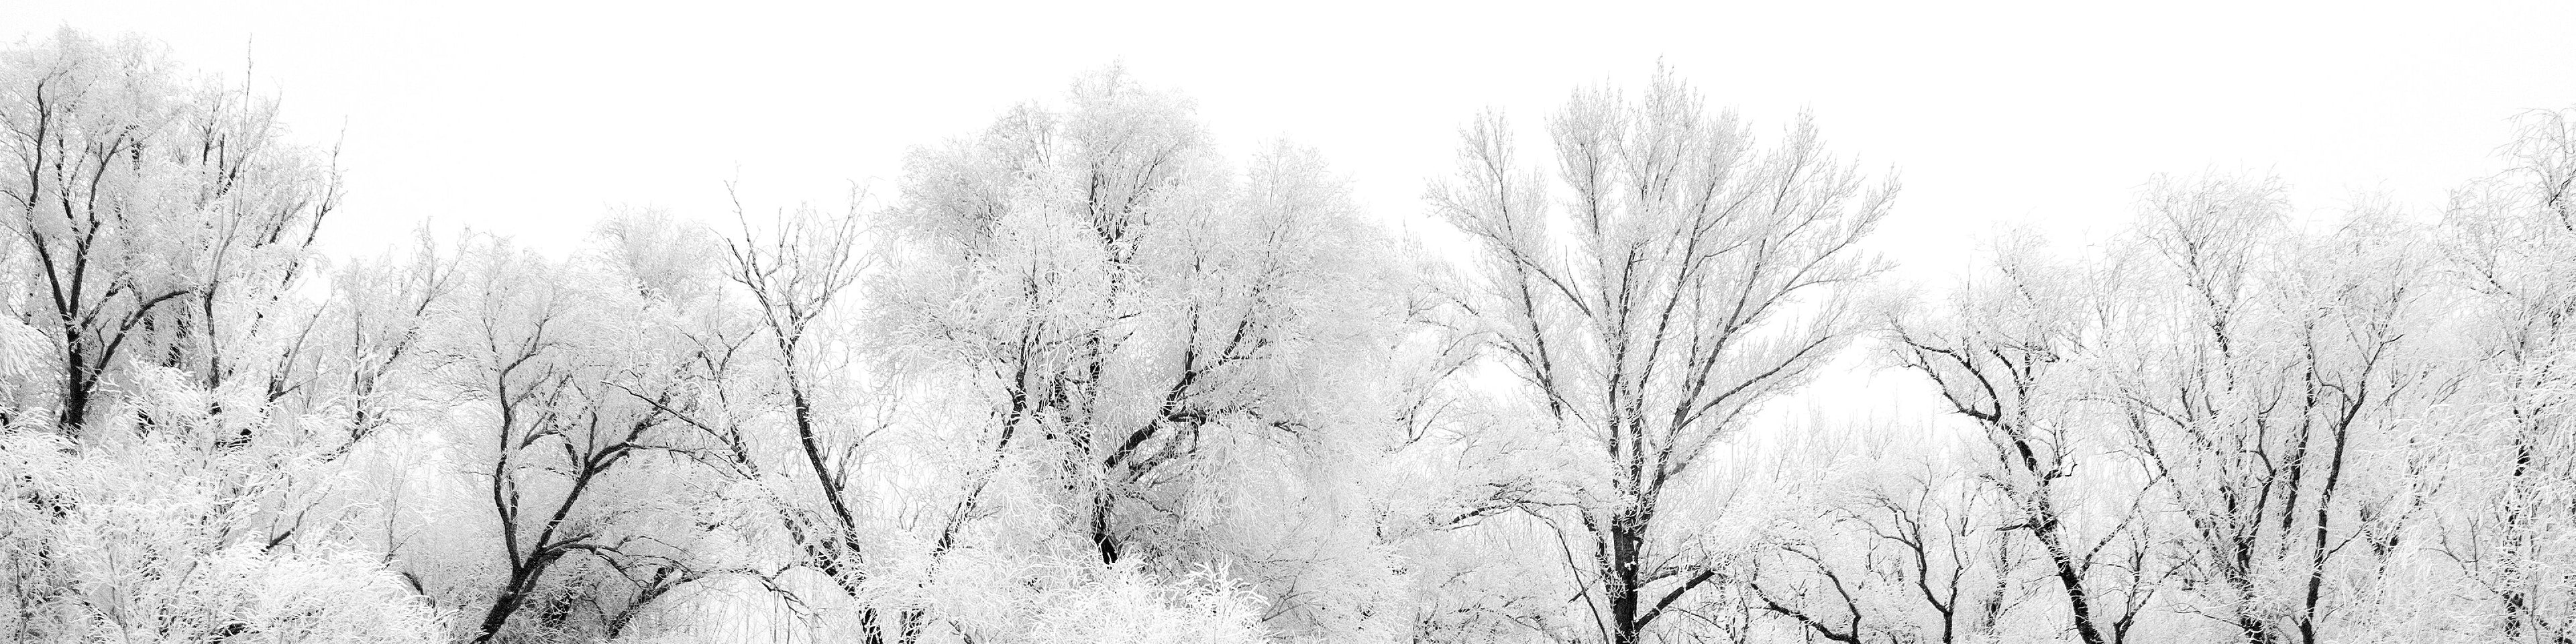 White snowy forest.